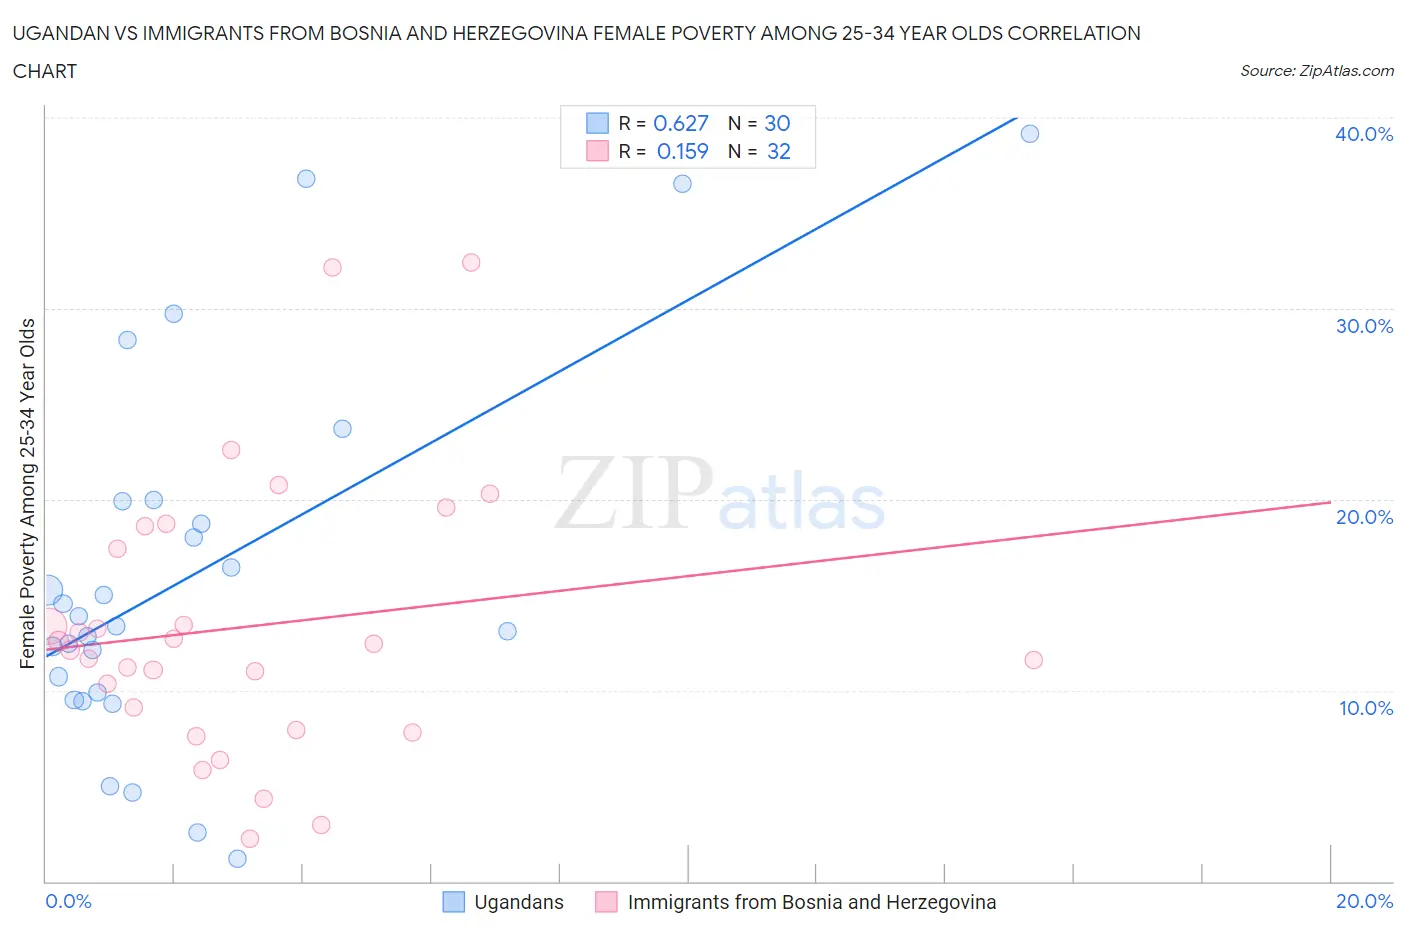 Ugandan vs Immigrants from Bosnia and Herzegovina Female Poverty Among 25-34 Year Olds